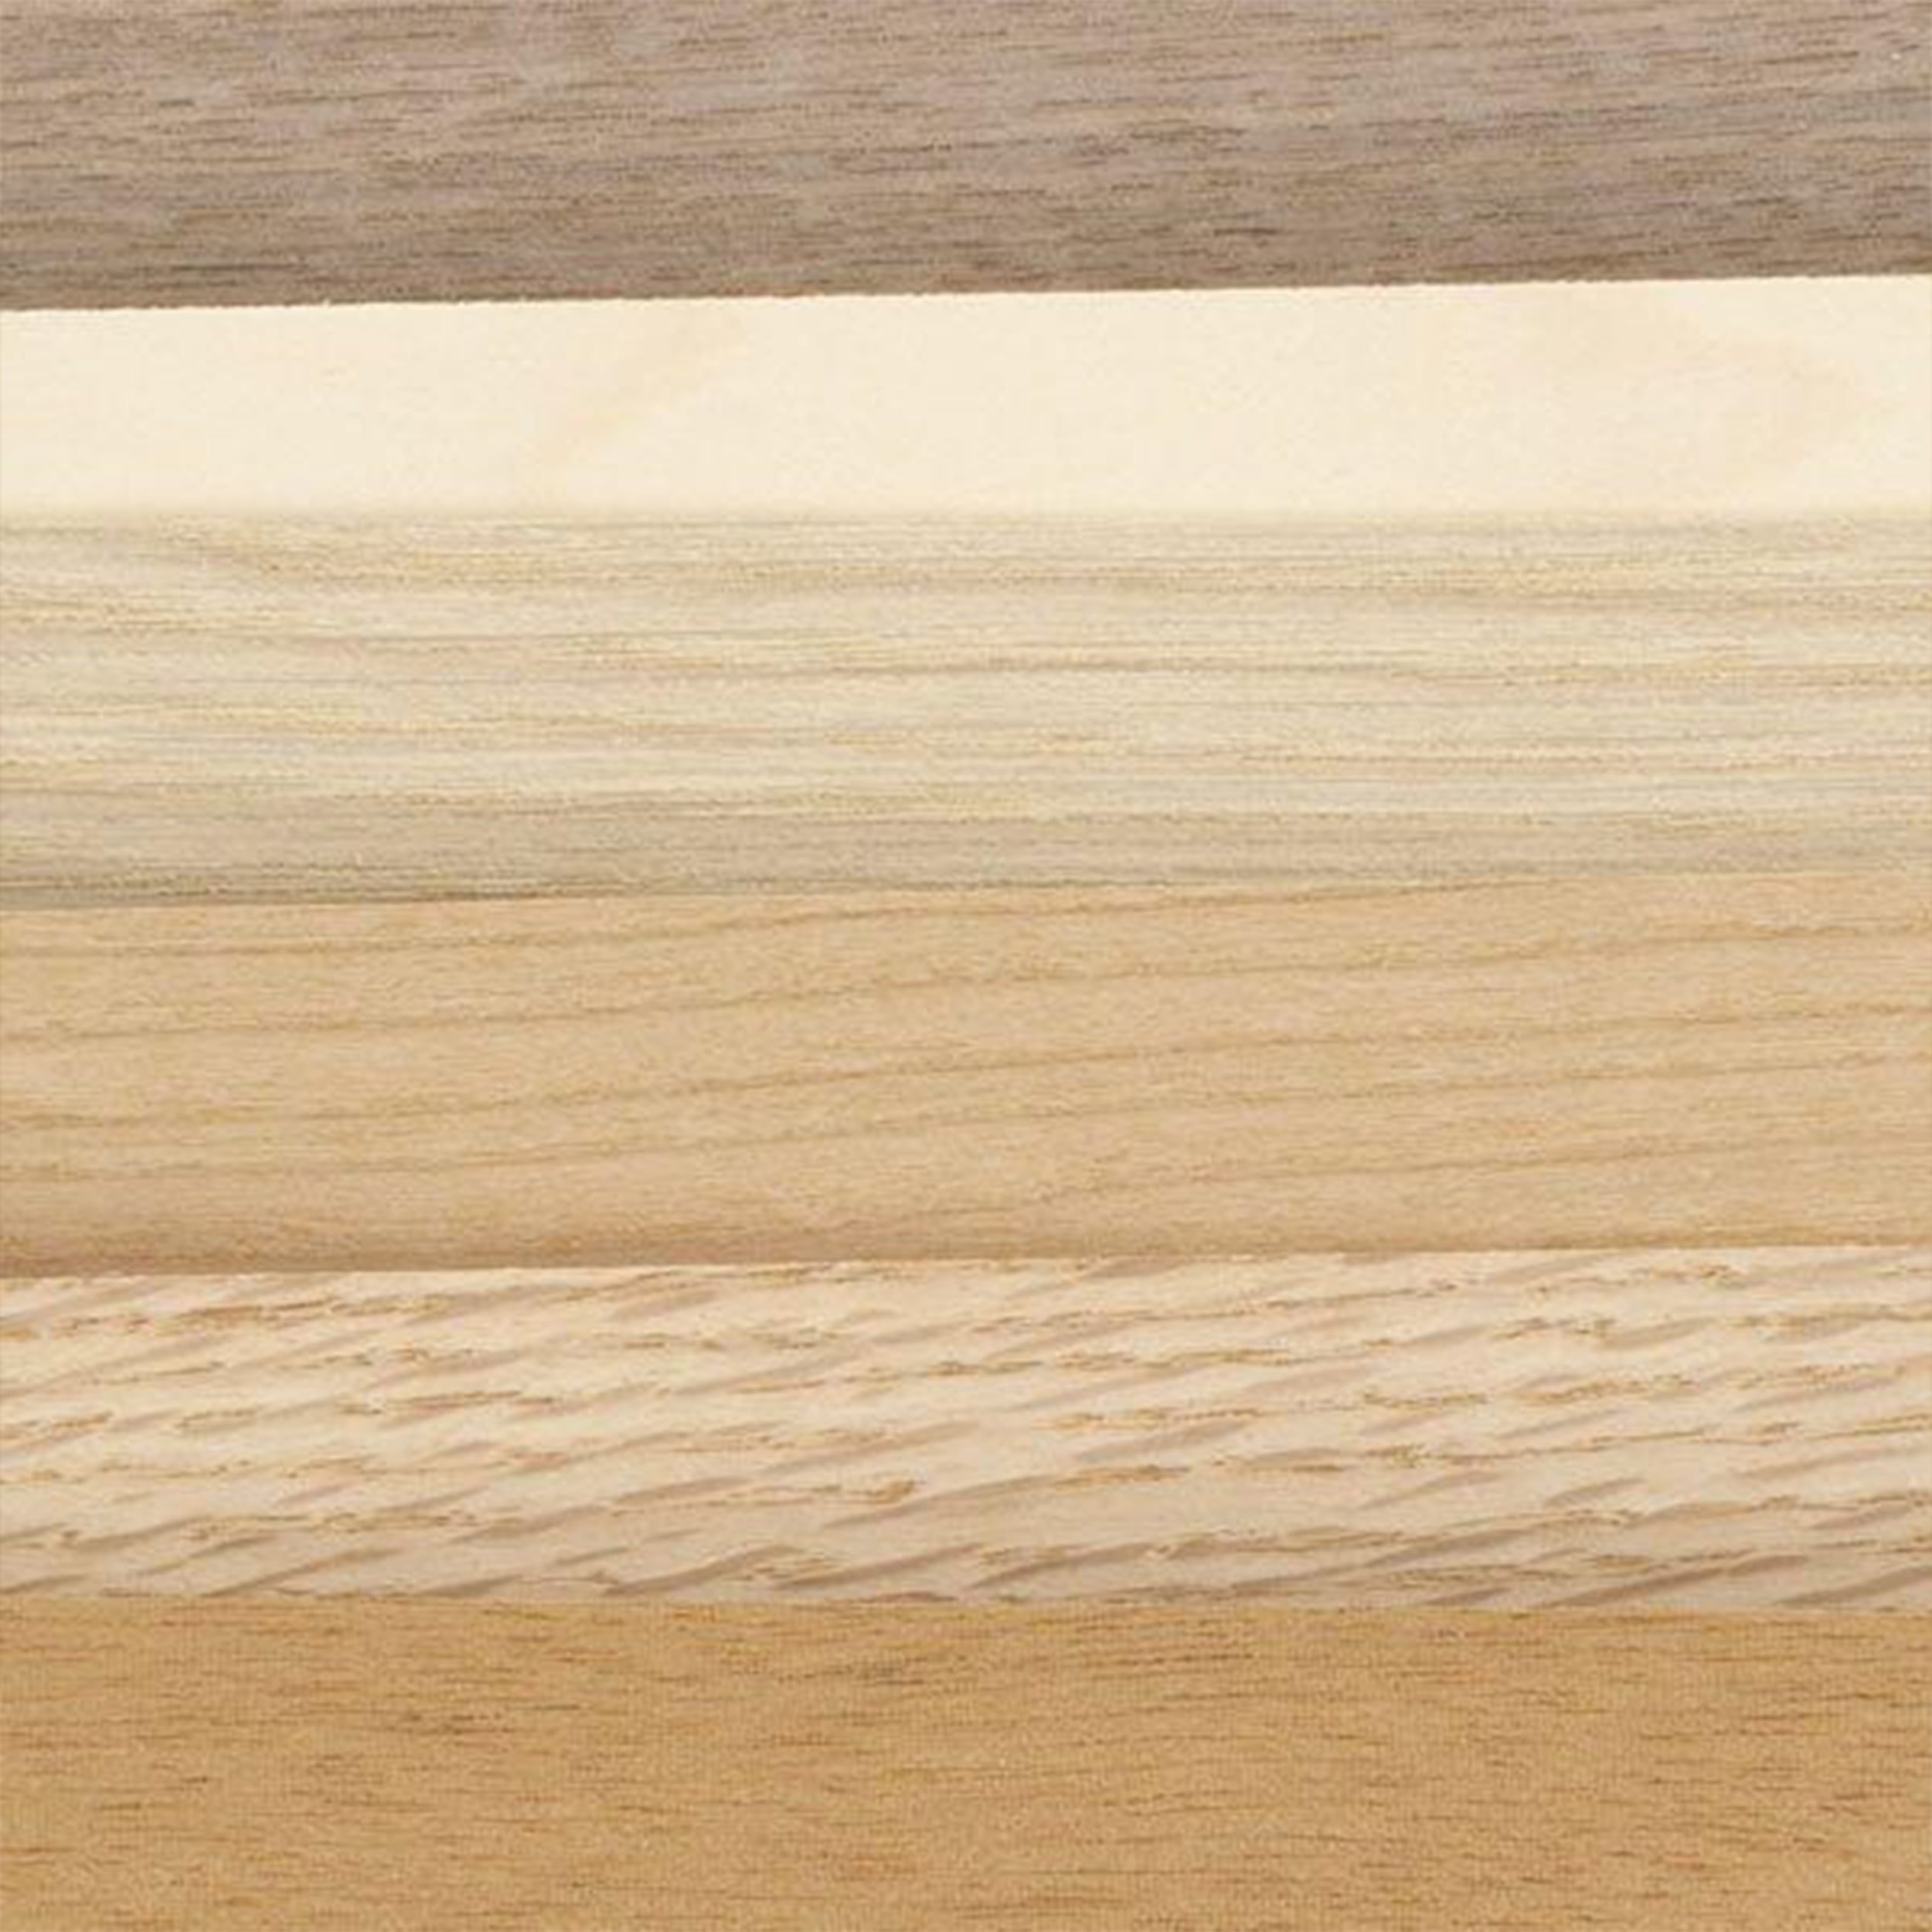 Variety Pack Wood Veneer Raw/Unbacked ~4 sq ft Pack of 7-9" x 9" Sheets 